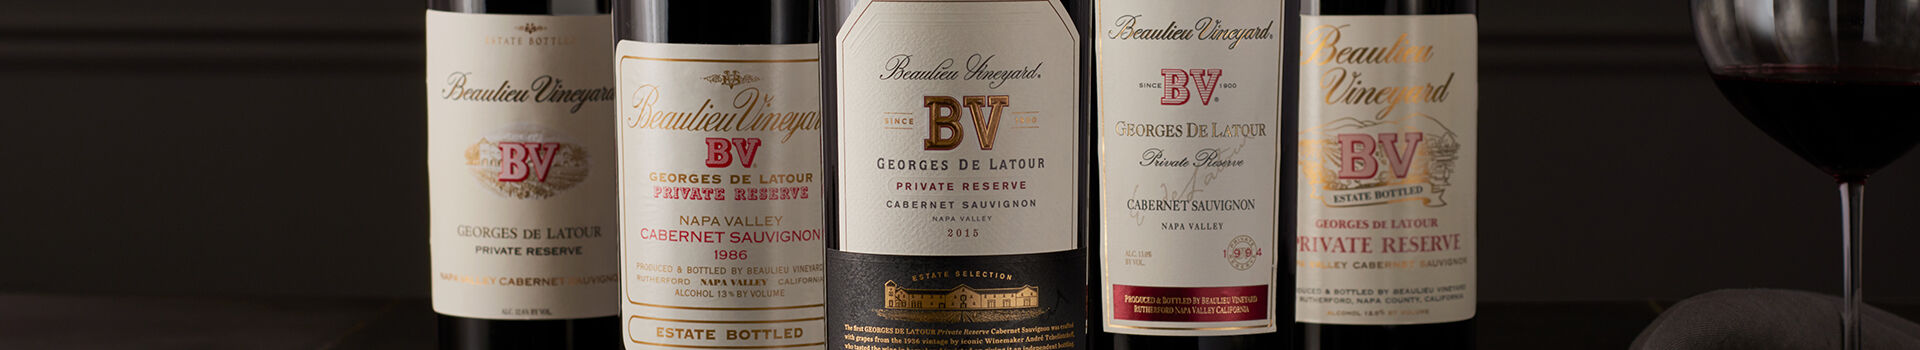 Historical Vintages of Beaulieu Vineyard Wines